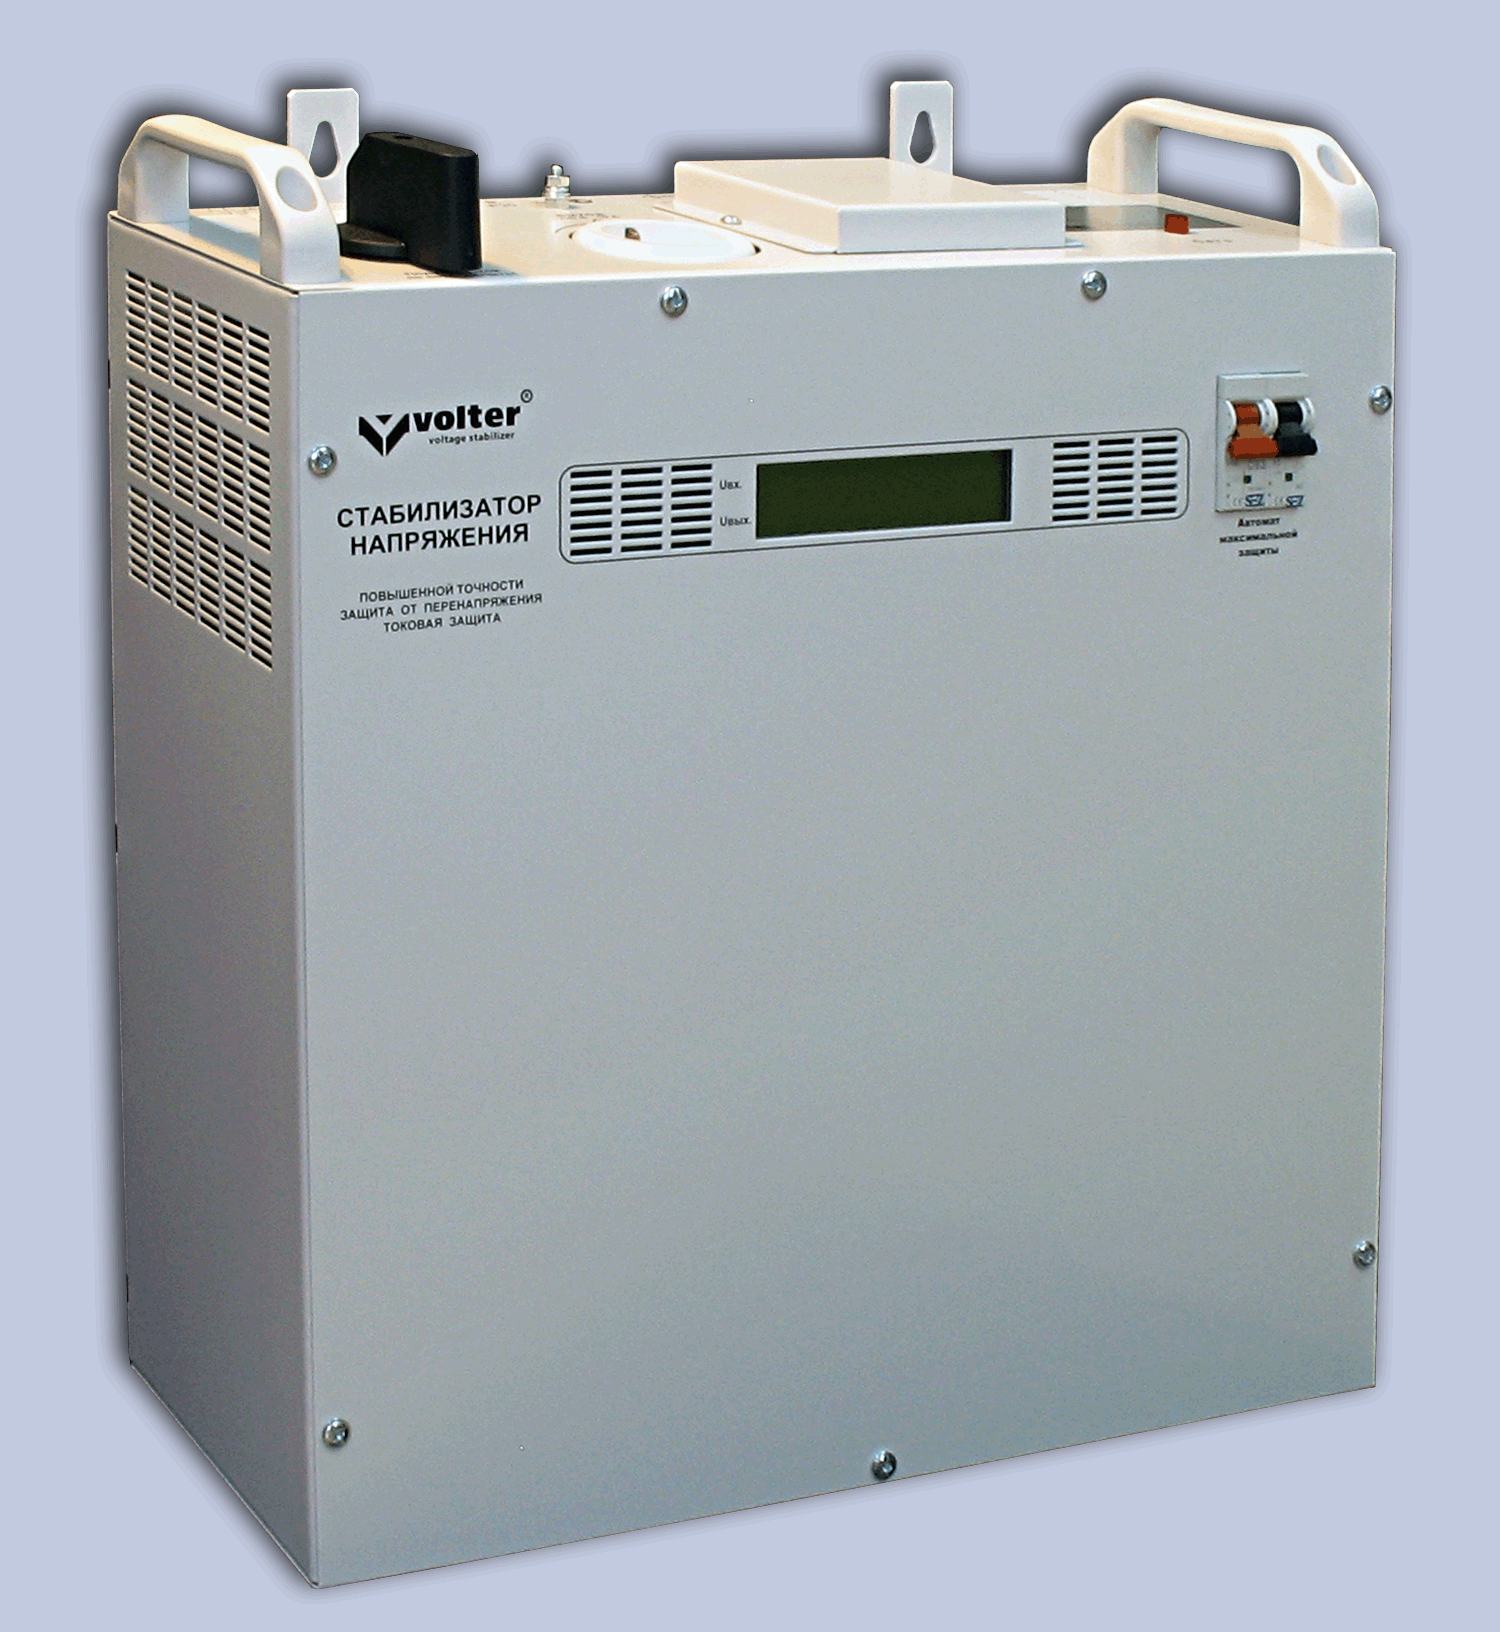 Стабилизатор 1-фазный СНПТО-11 пттм, мощность 11кВт, размеры 450х420х190, масса 21кг